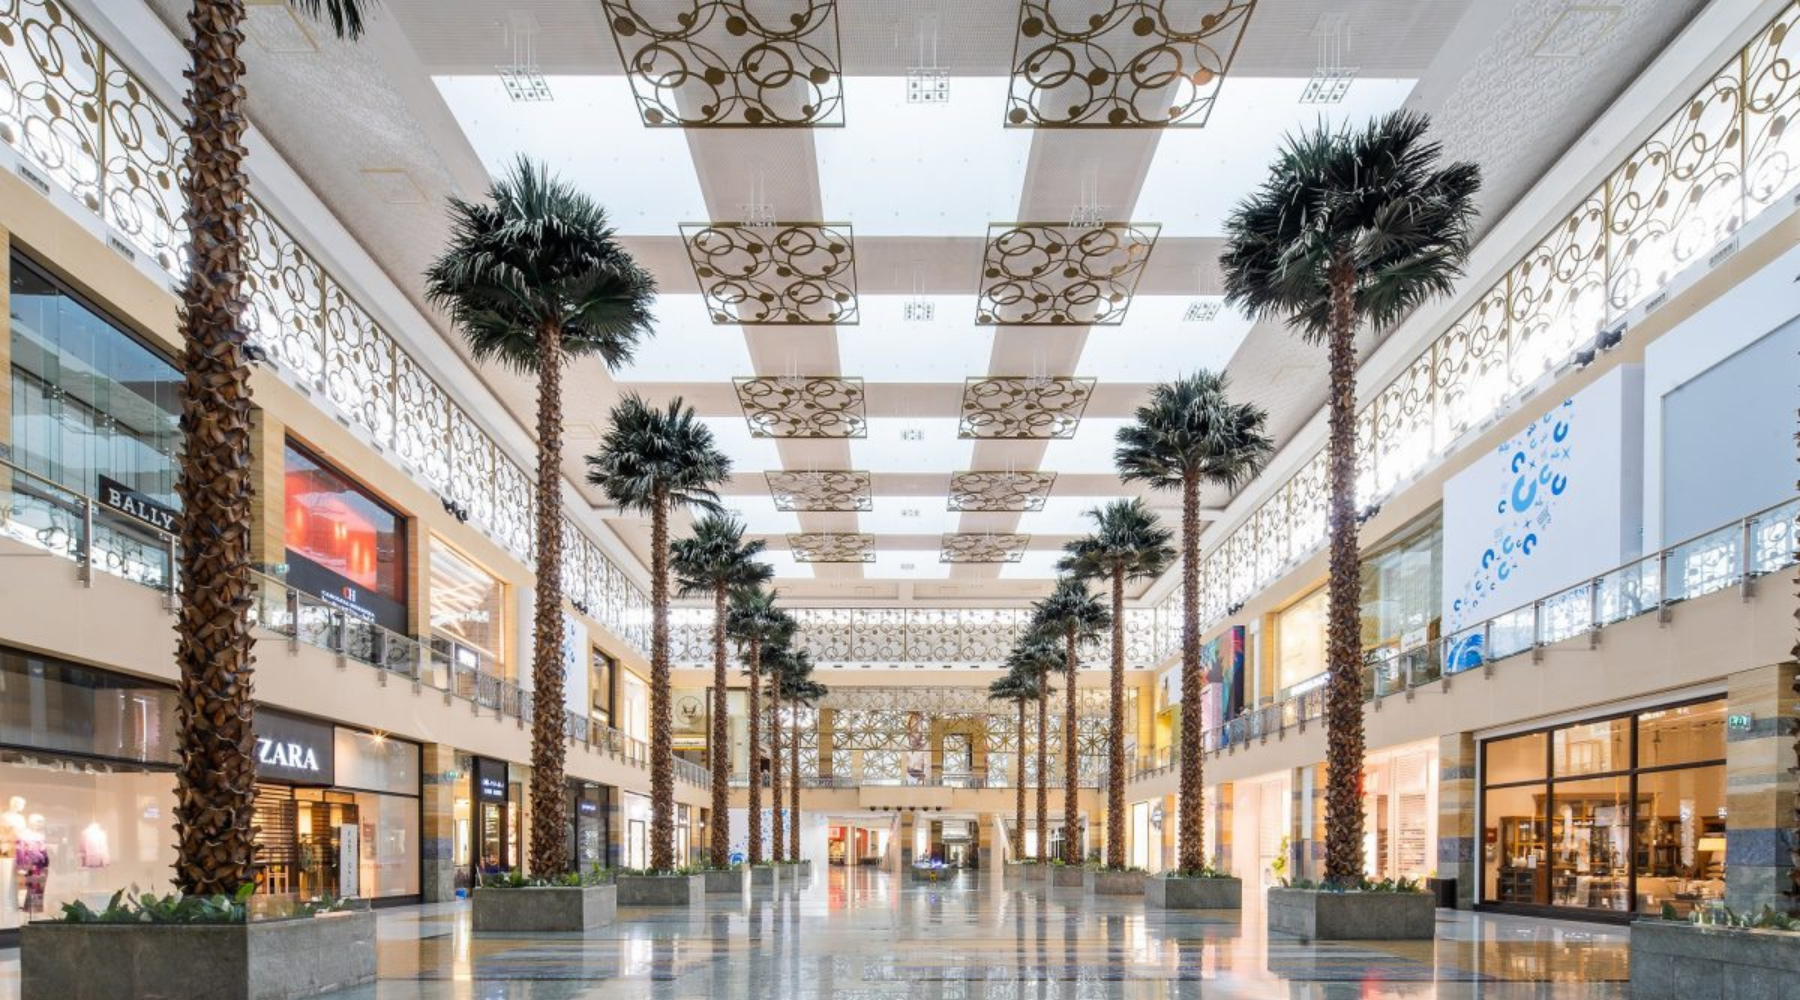 Majid Al Futtaim Shopping Malls Appoints Memac Ogilvy as Lead Creative Agency Across GCC